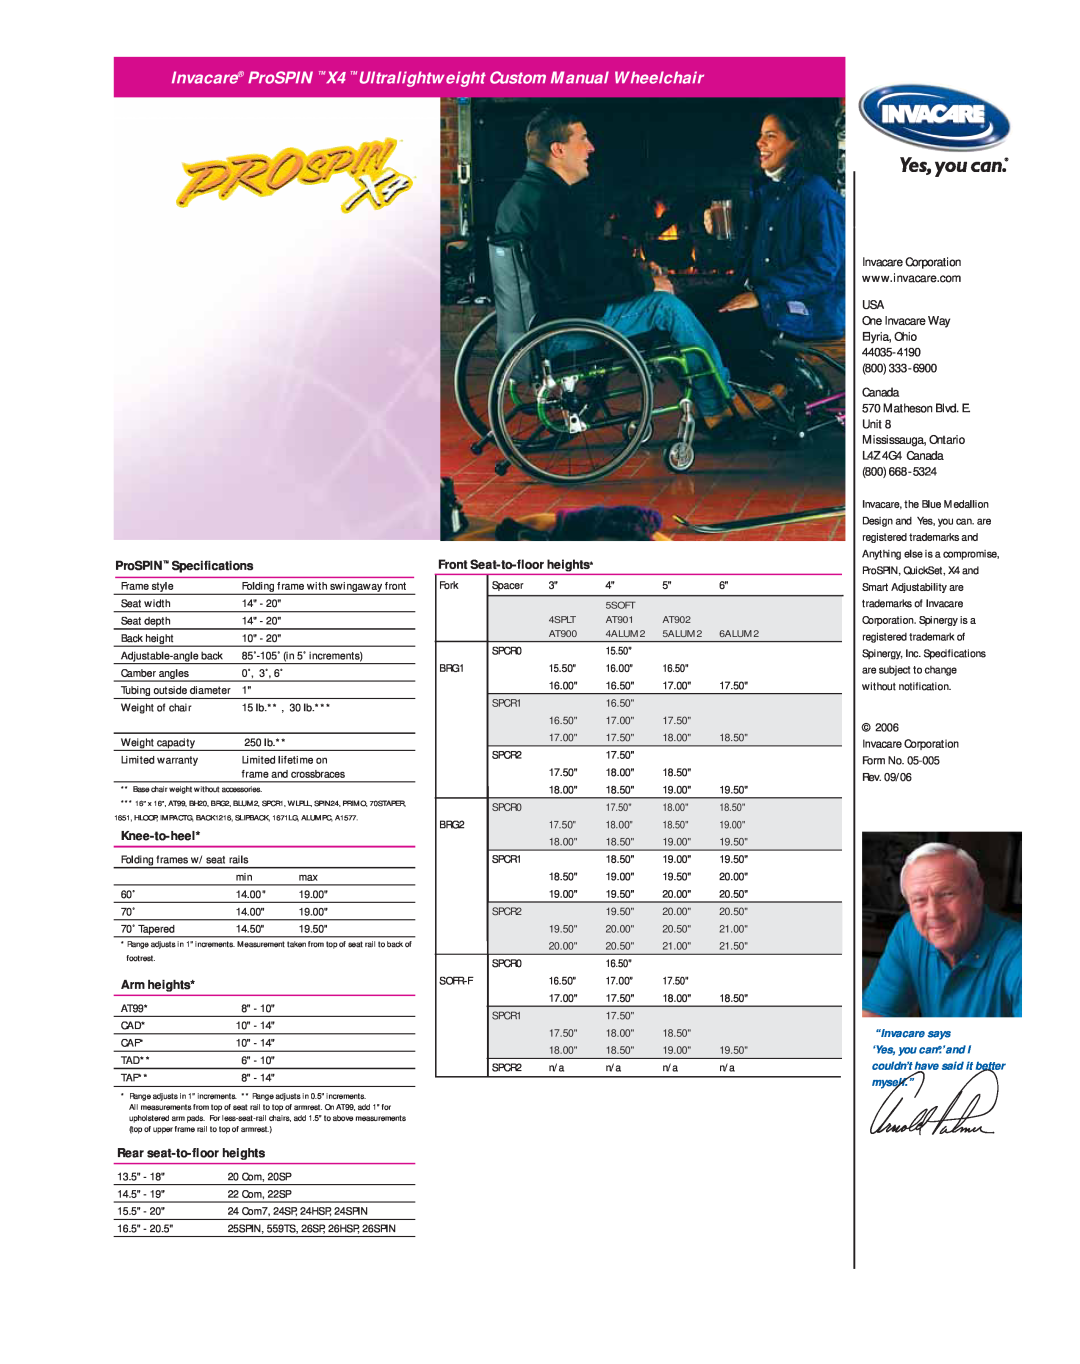 Invacare Invacare ProSPIN X4 Ultralightweight Custom Manual Wheelchair, Invacare Corporation, 44035-4190 800 Canada 